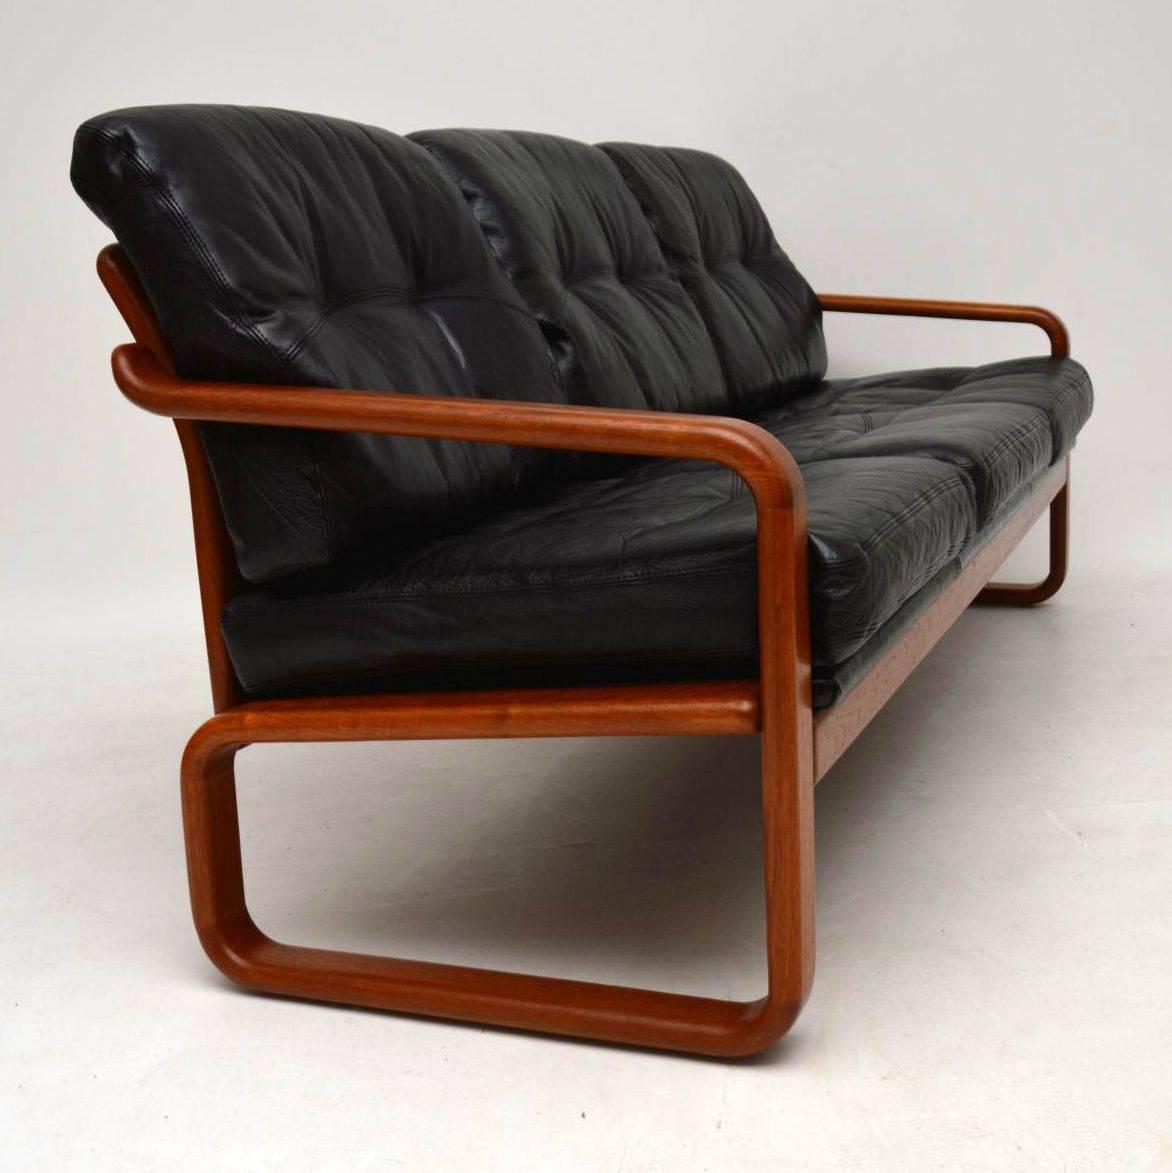 1960s Danish Teak and Leather Vintage Sofa 1